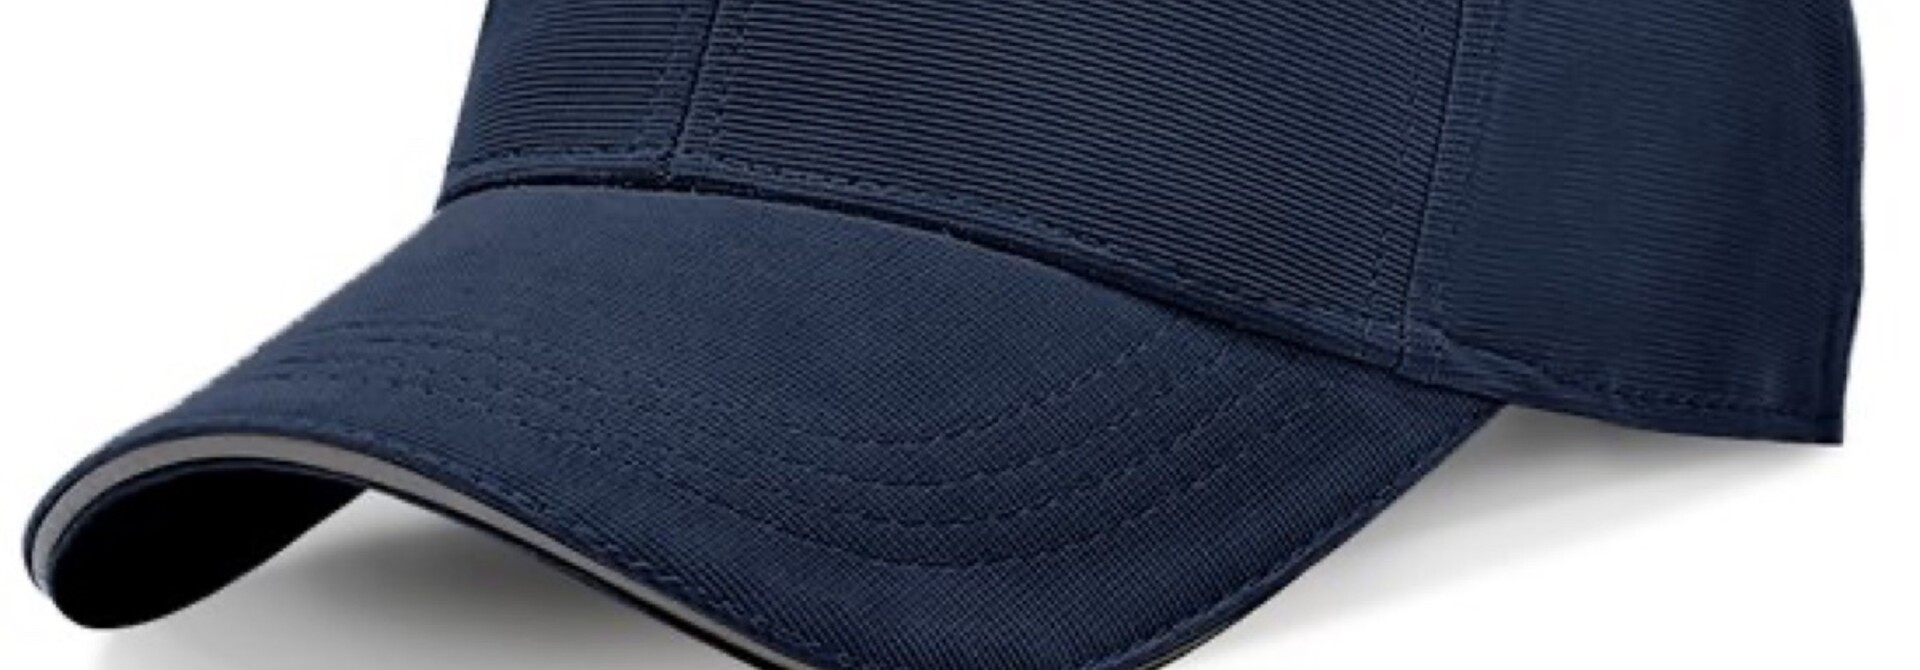 Baseballkappe für Männer und Frauen - Mit Reflektierendem Rand - Trucker Cap - Kopfumfang 55-60 CM  - Blau